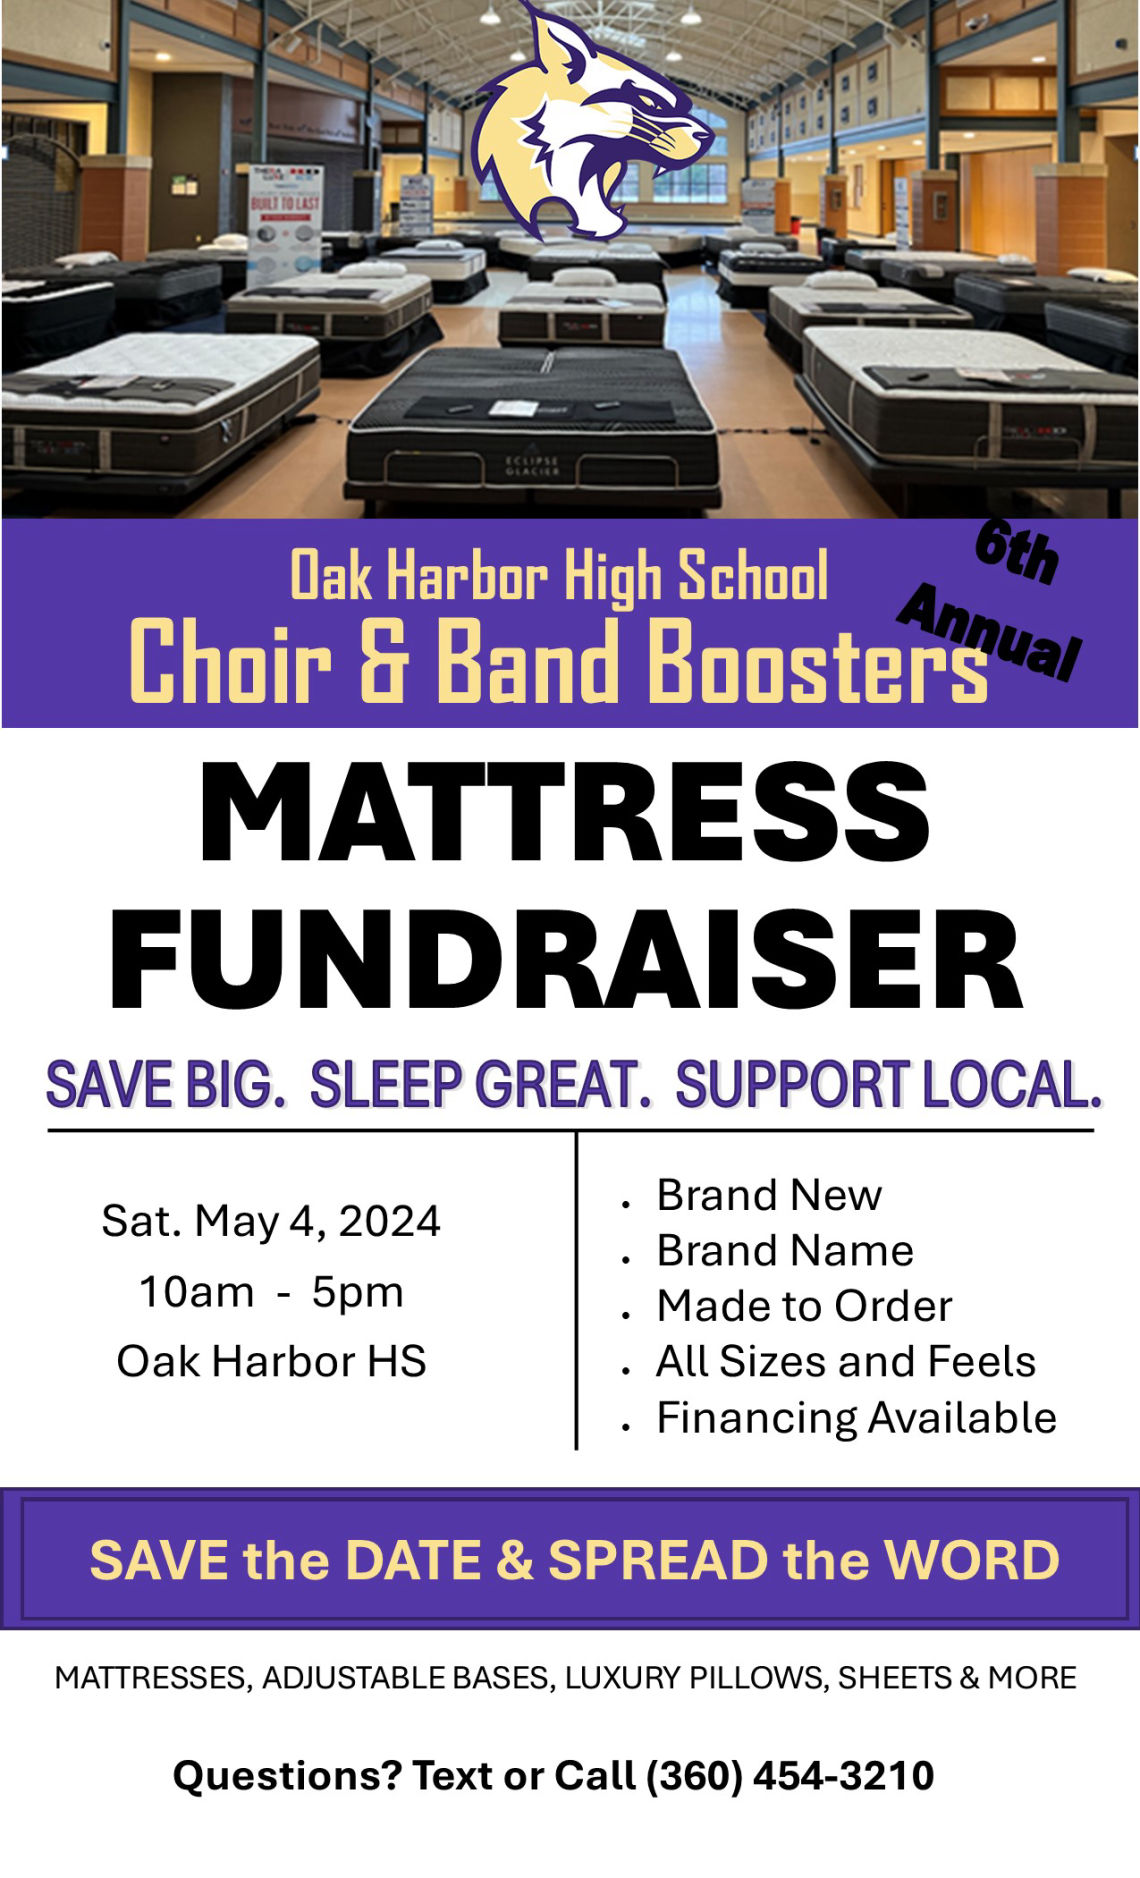 Oak Harbor Mattress Sale Fundraiser